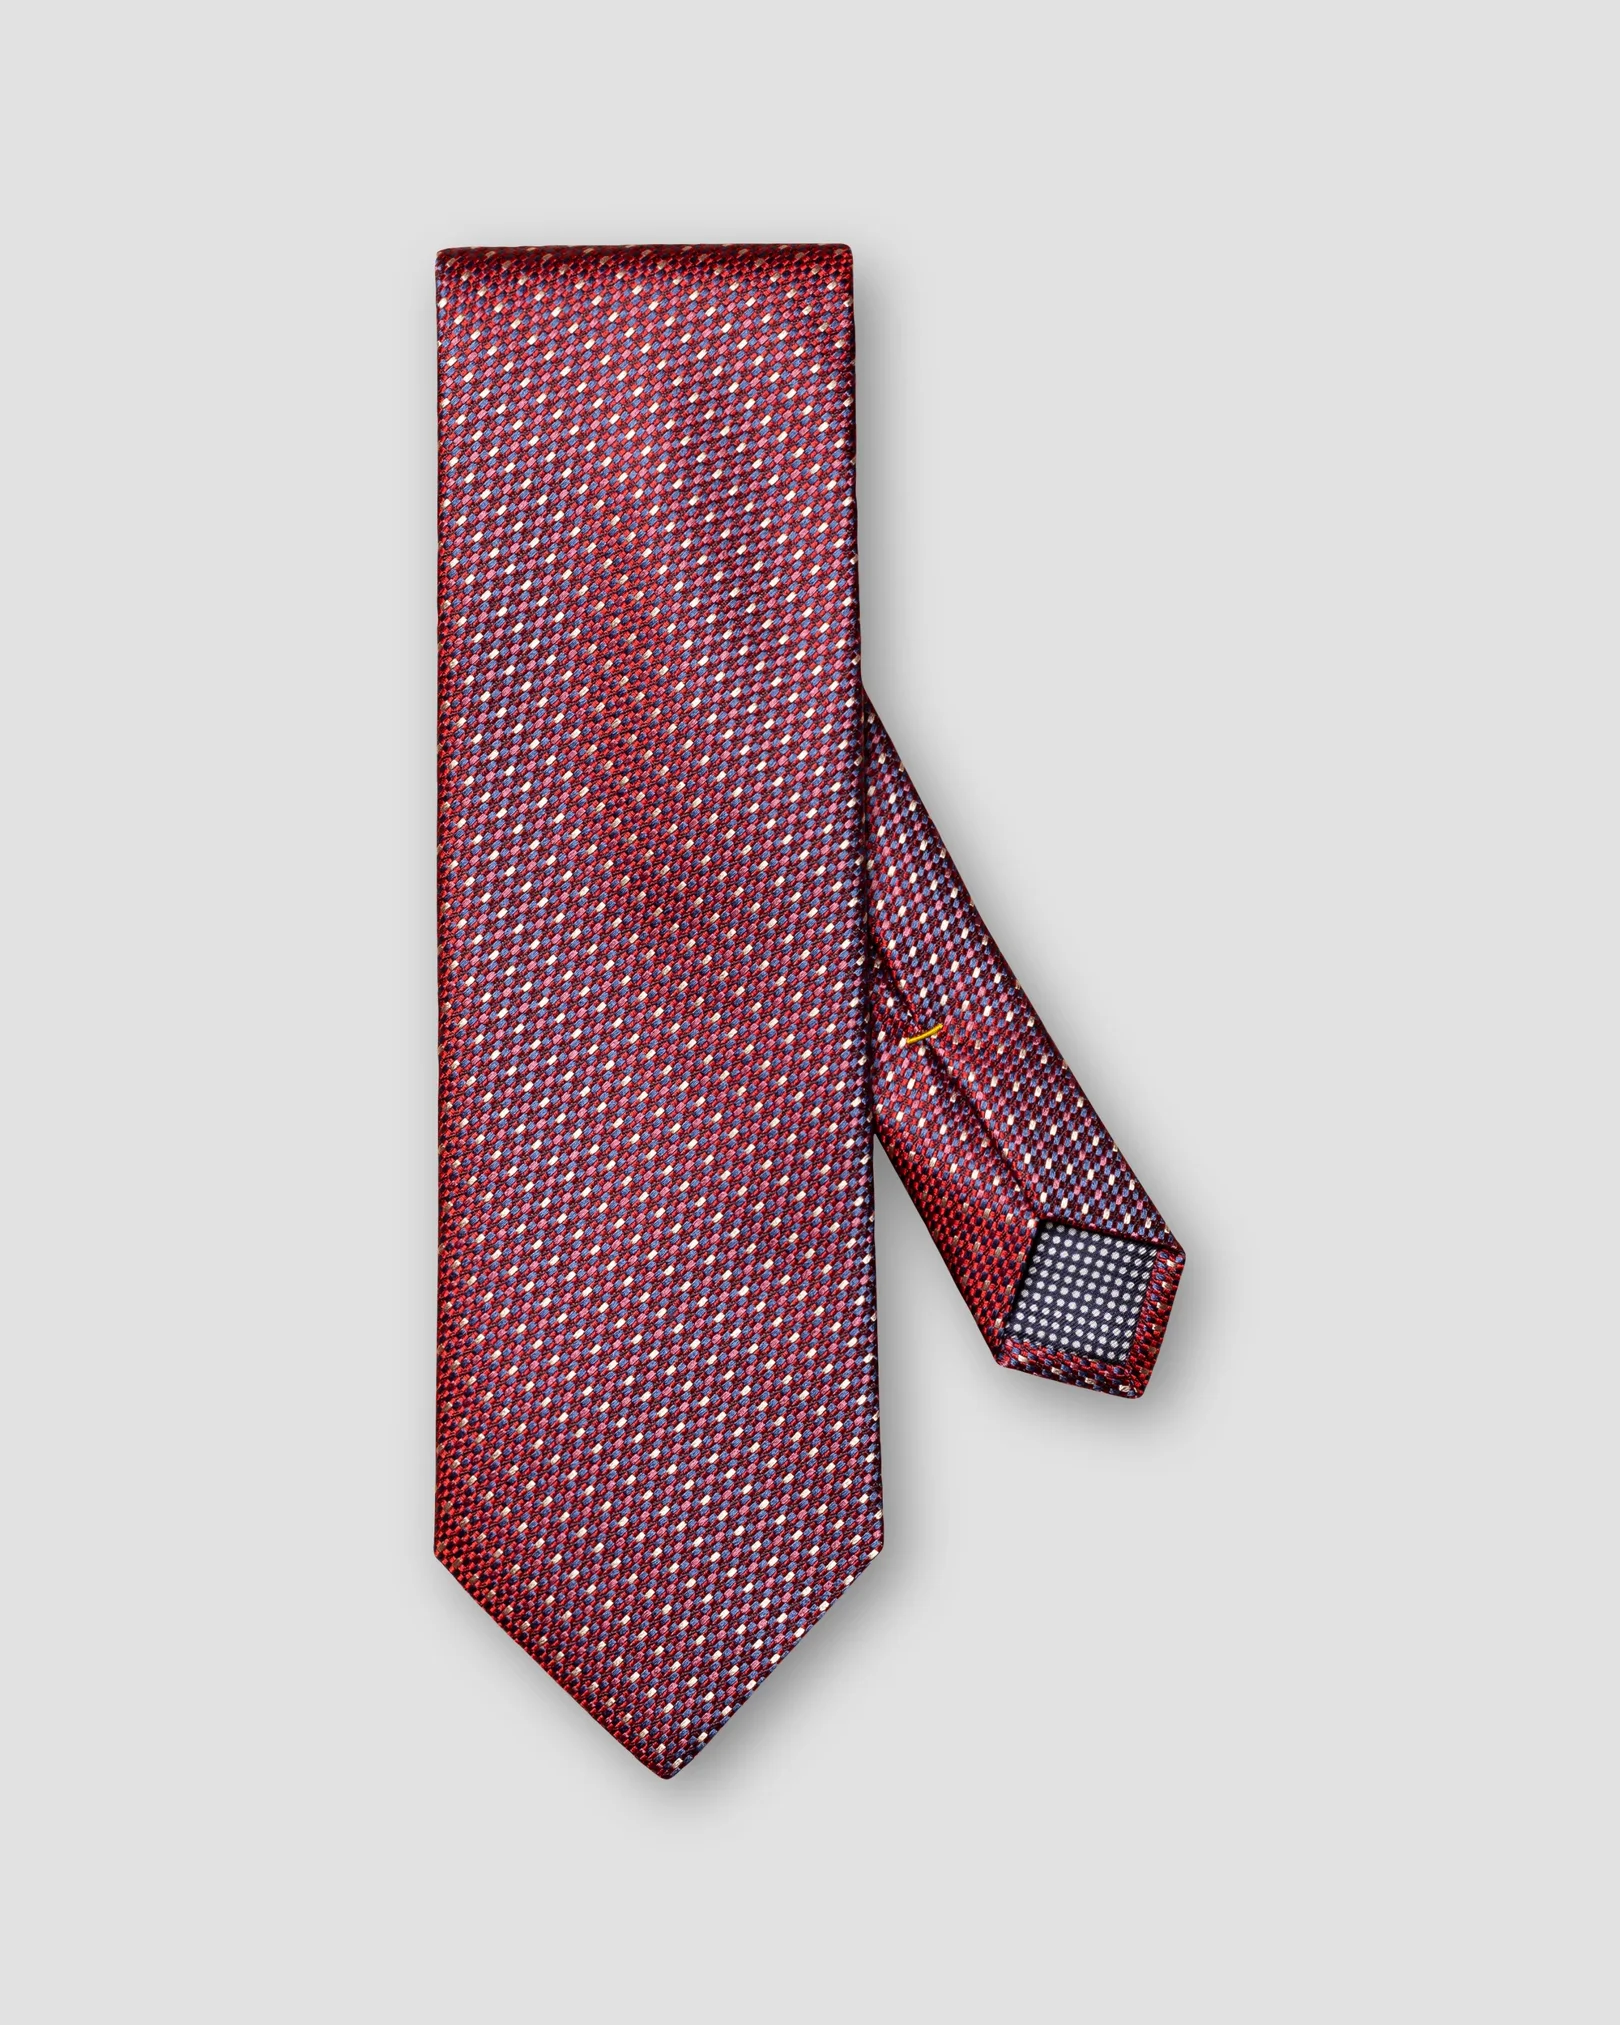 Eton - dark red multi colored tie